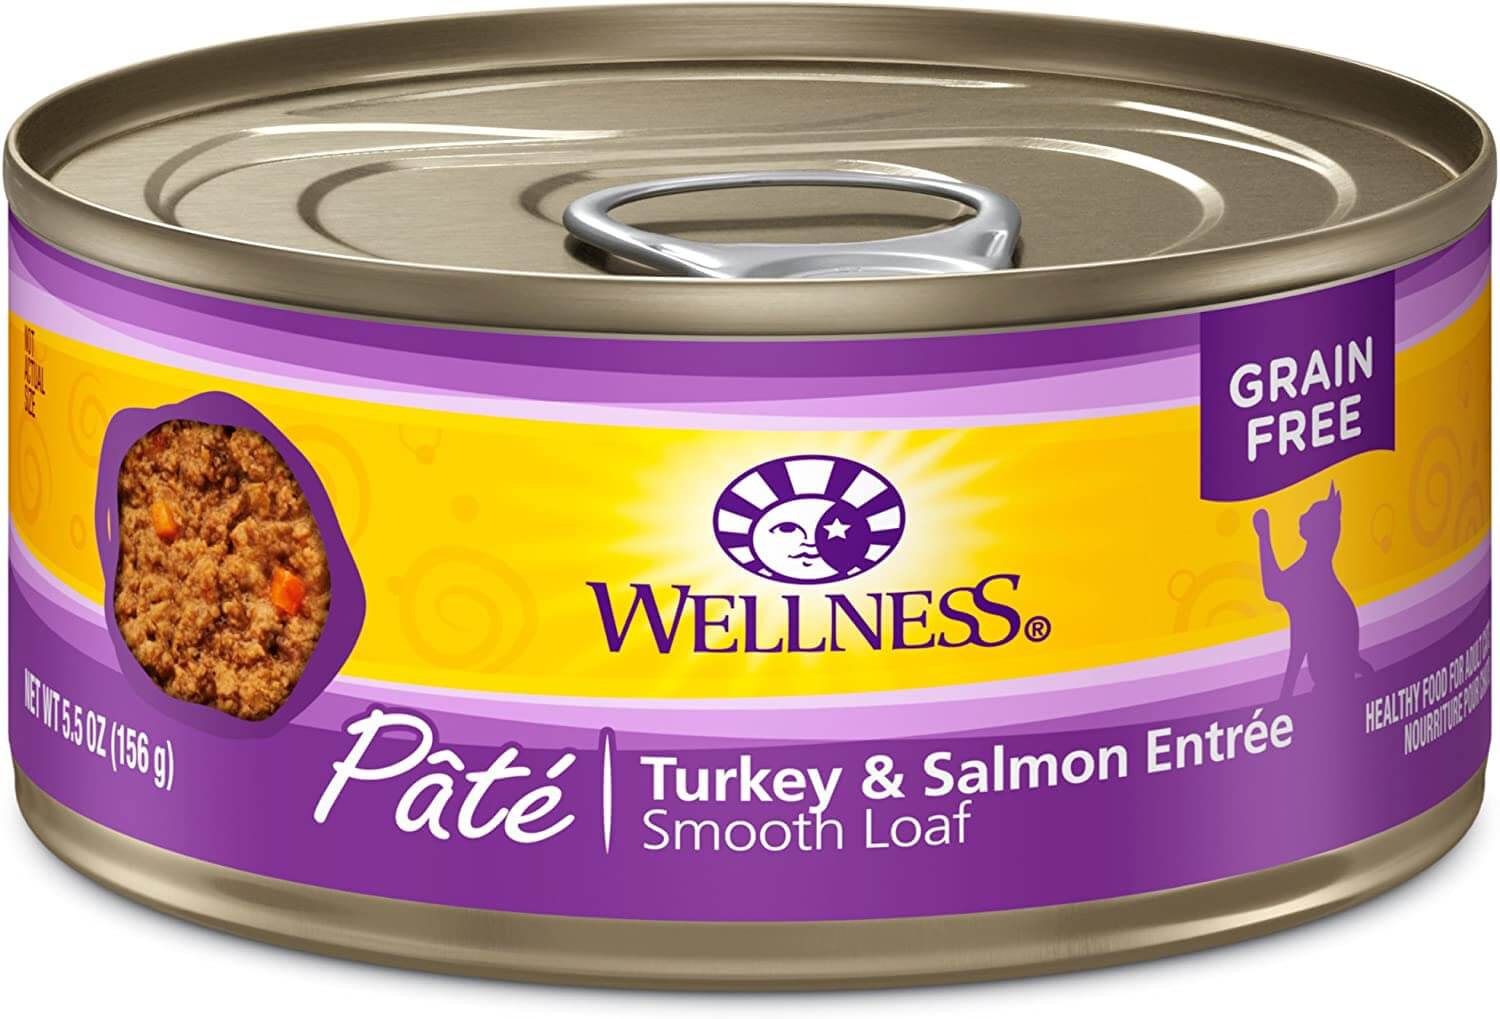 Wellness Complete Health Grain Free Cat Food